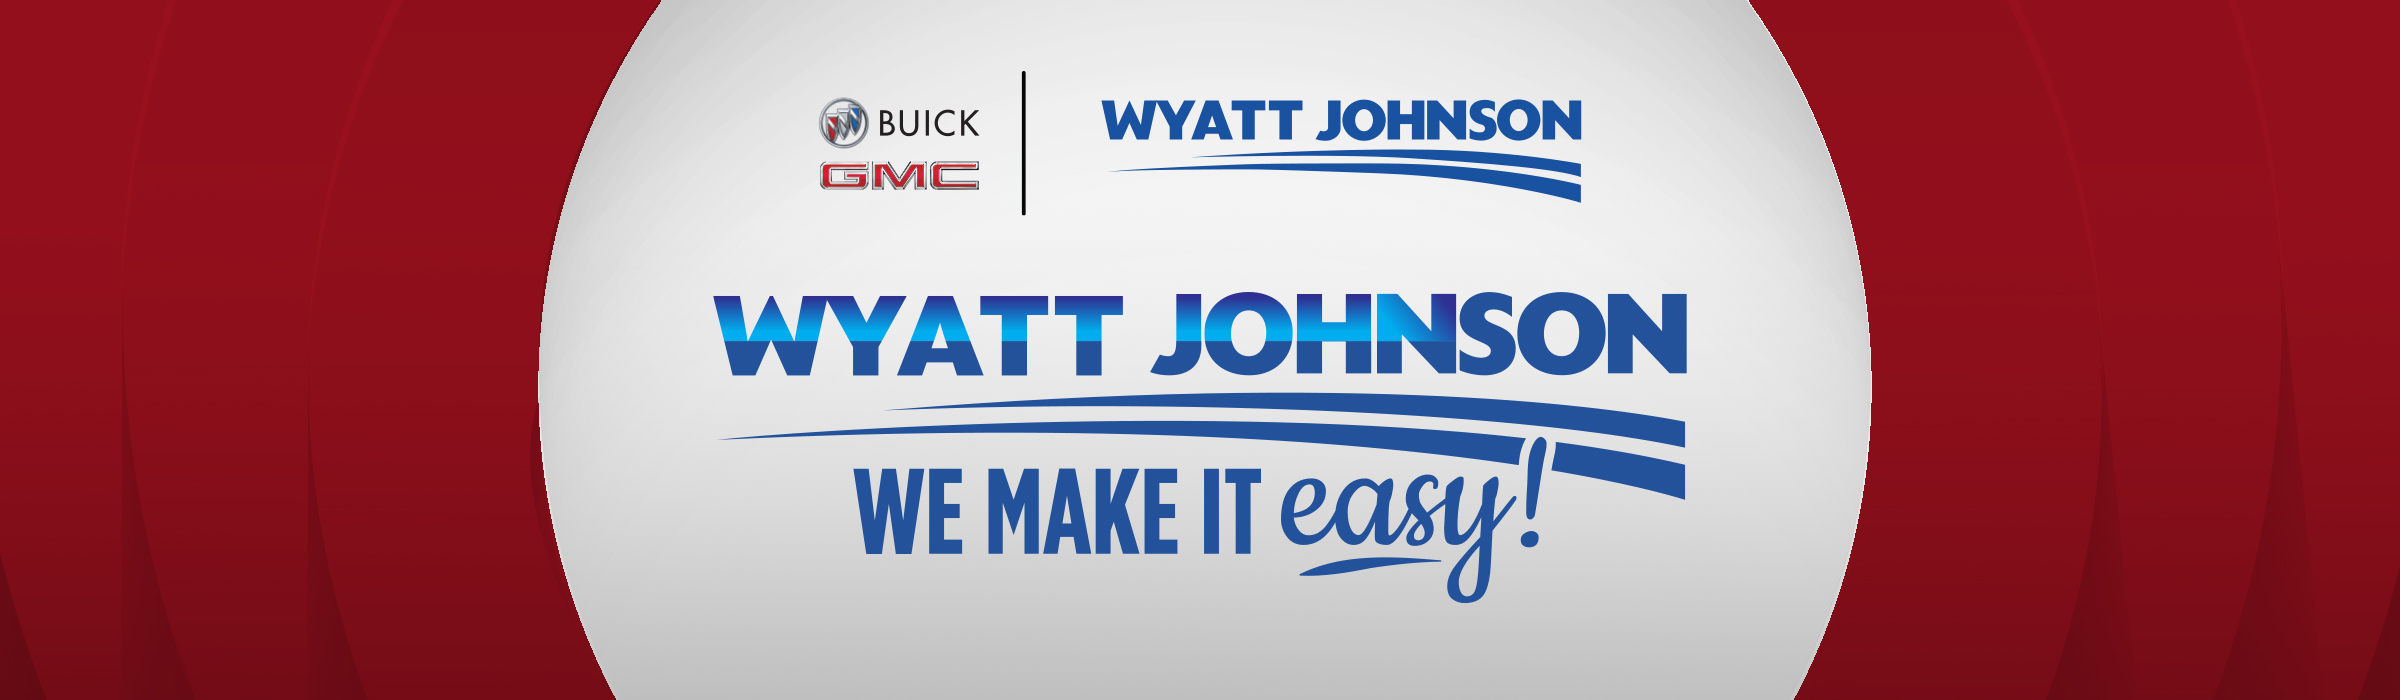 Wyatt Johnson Buick GMC We Make It Easy! Logo